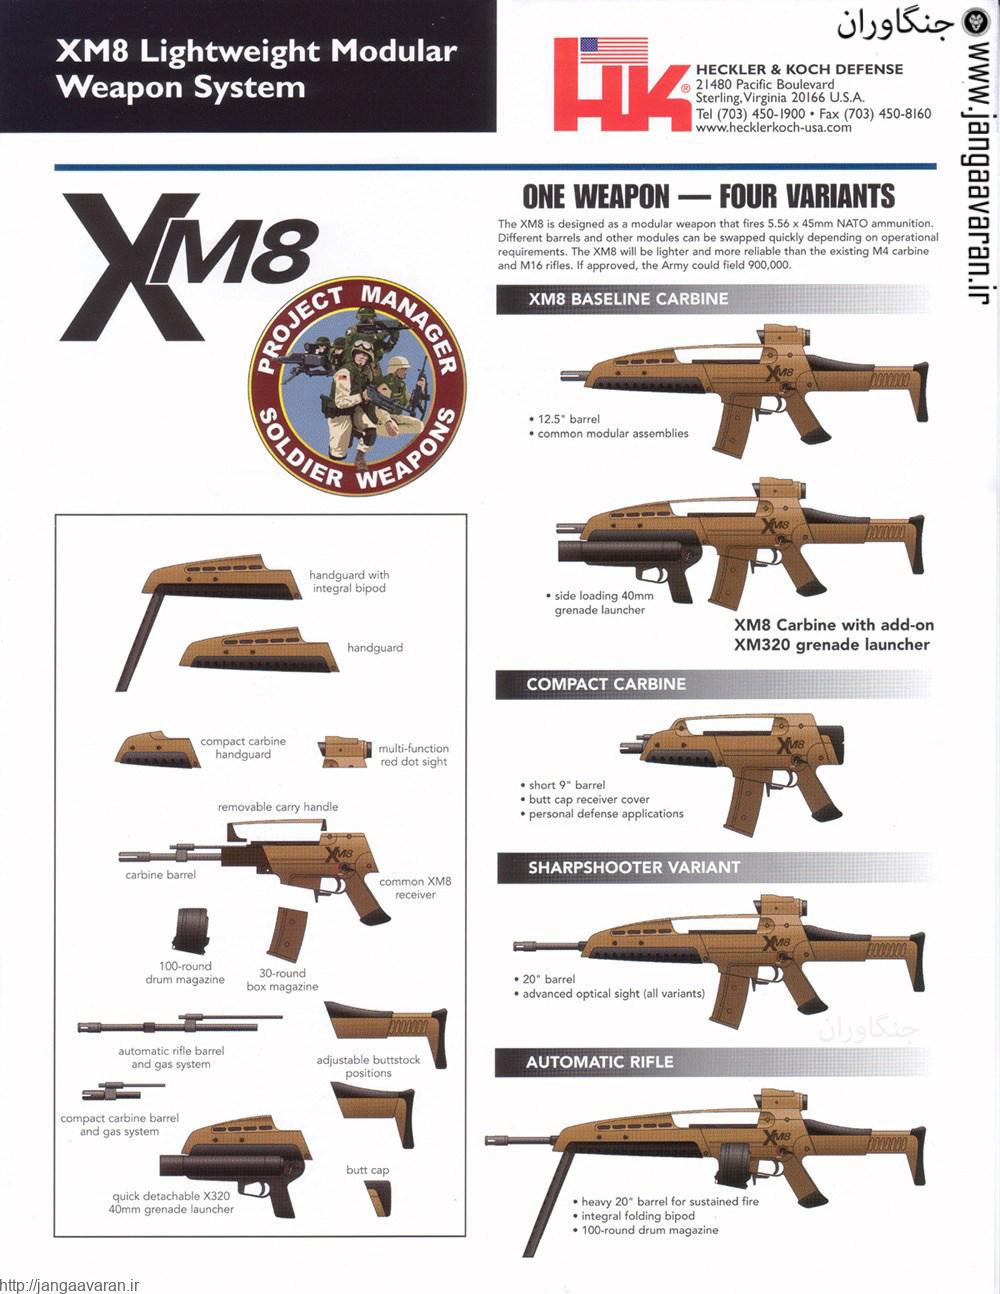 XM8 modularity